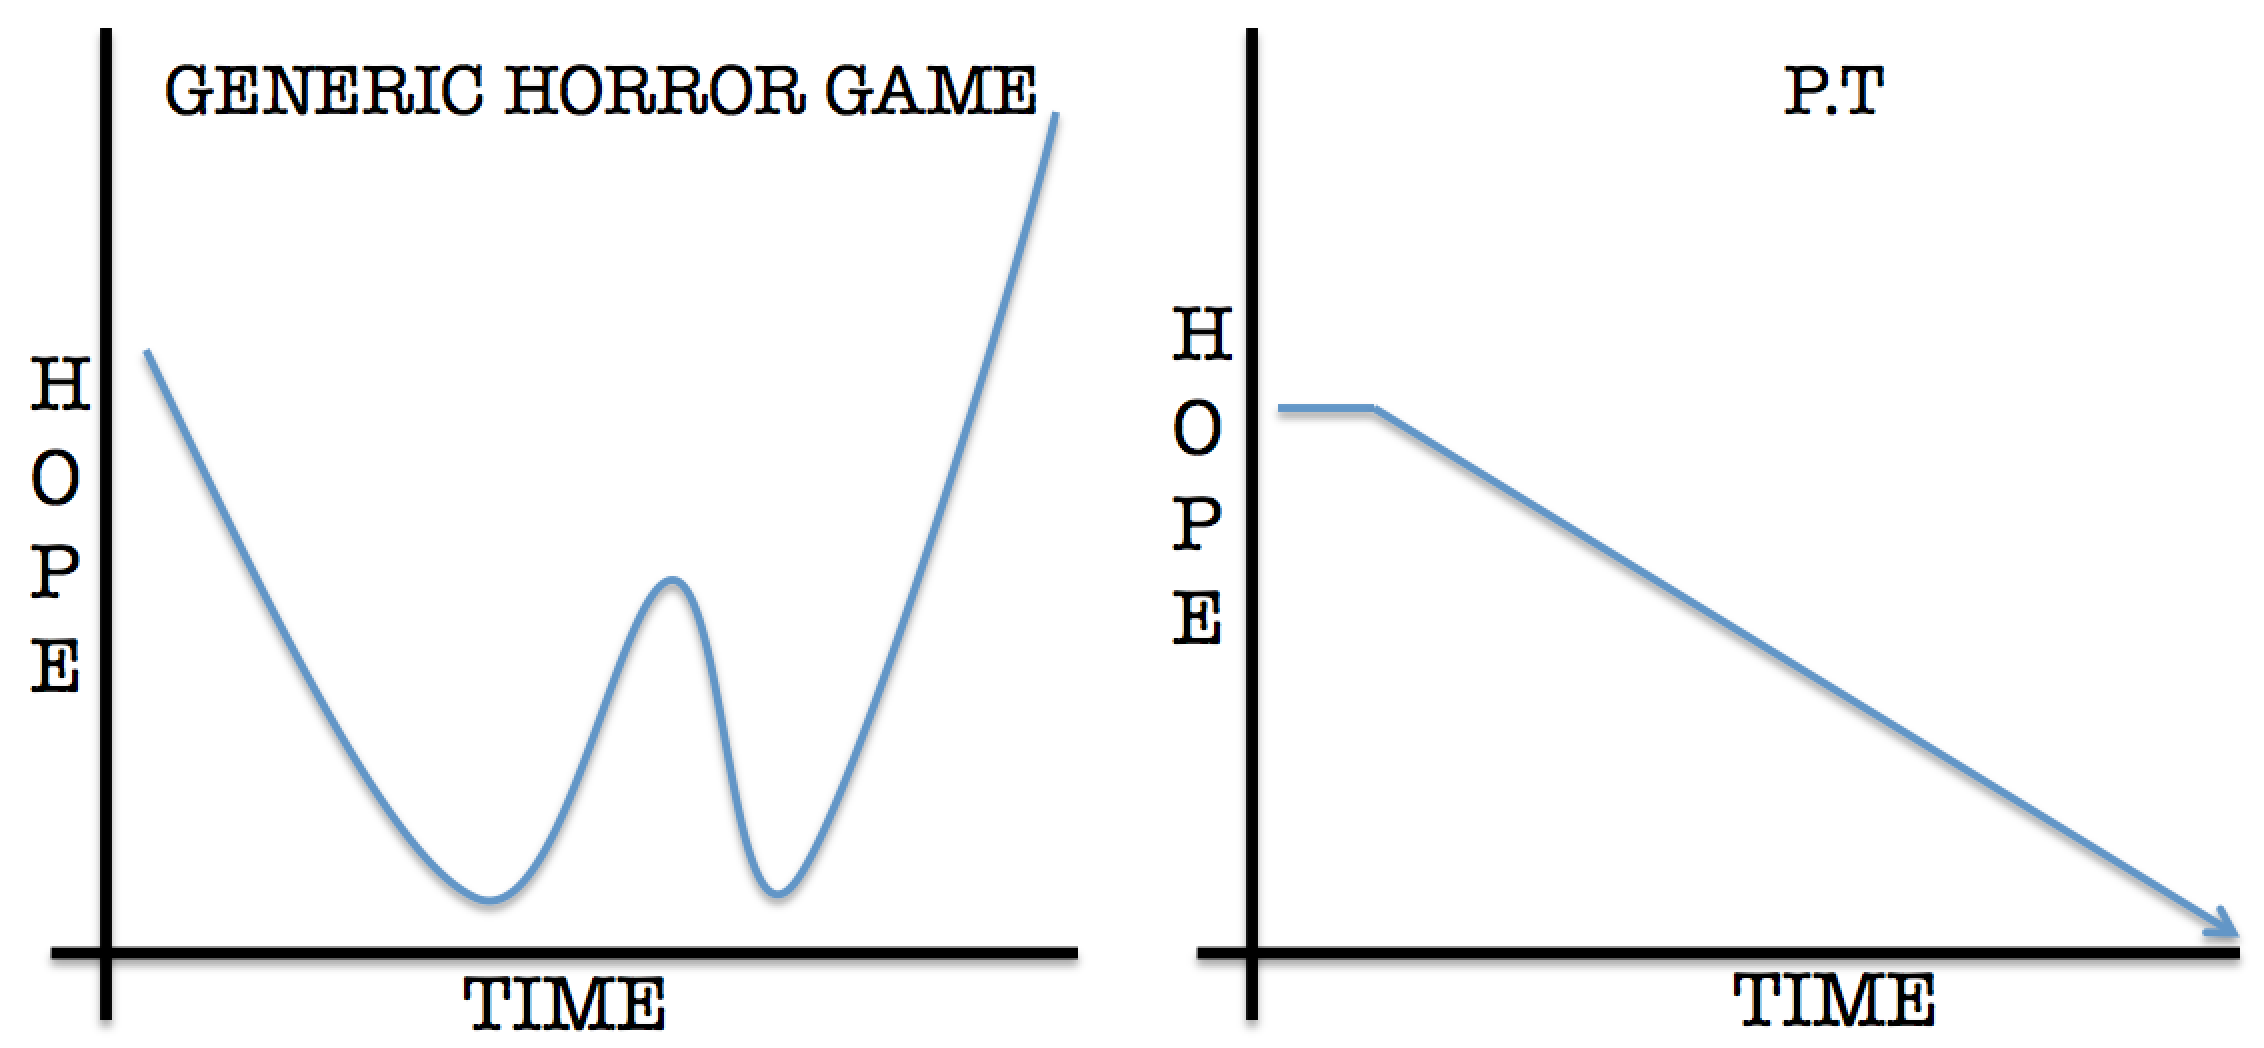 p.t. graph 2